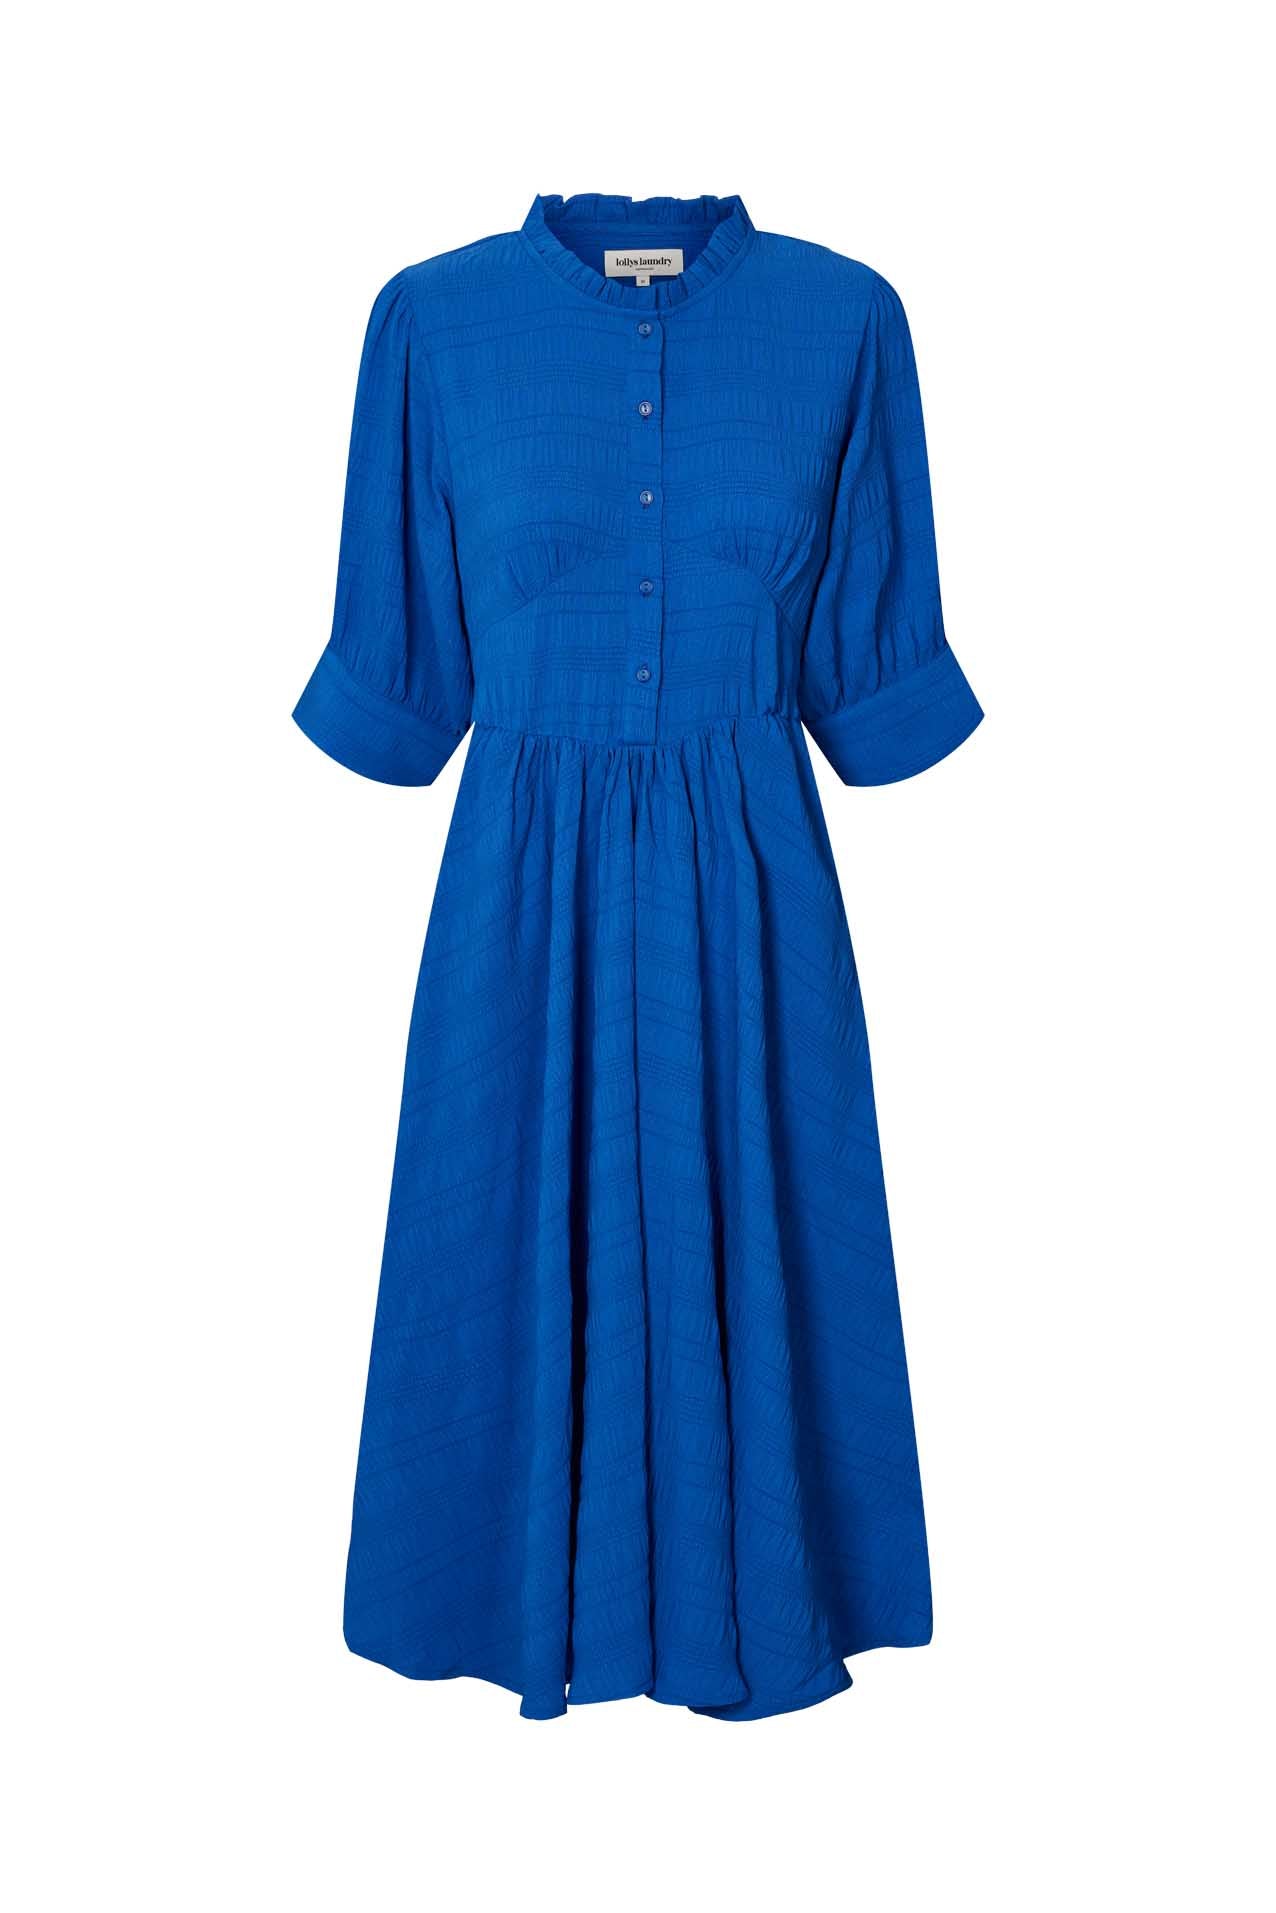 Lollys Laundry Boston Dress - Blue